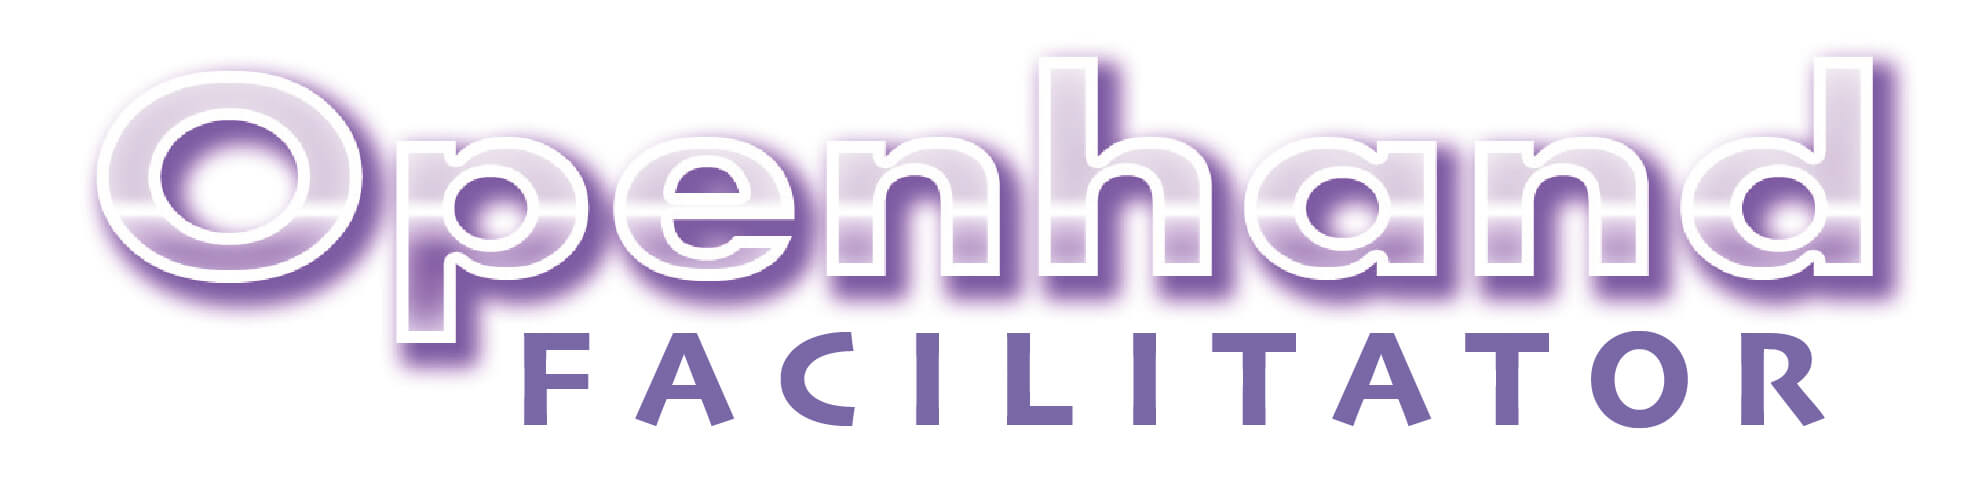 Openhand Accredited Facilitator (Lilac logo)